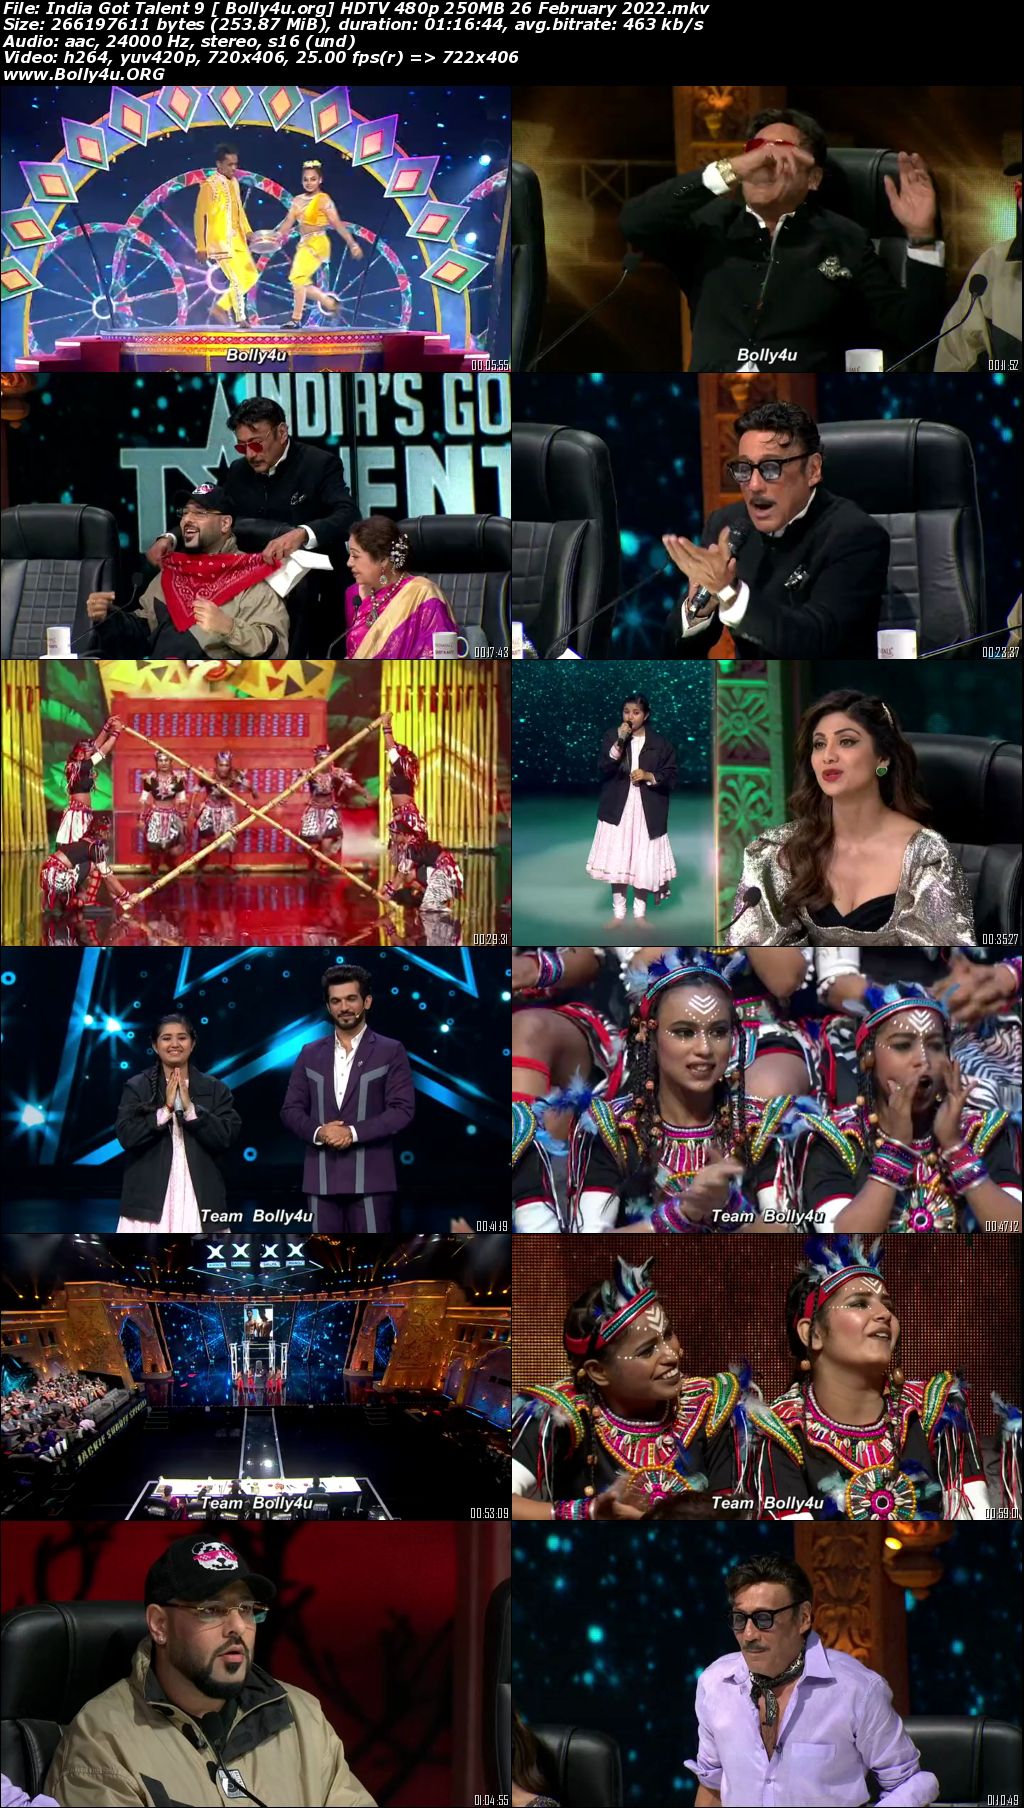 India Got Talent 9 HDTV 480p 250MB 26 February 2022 Download